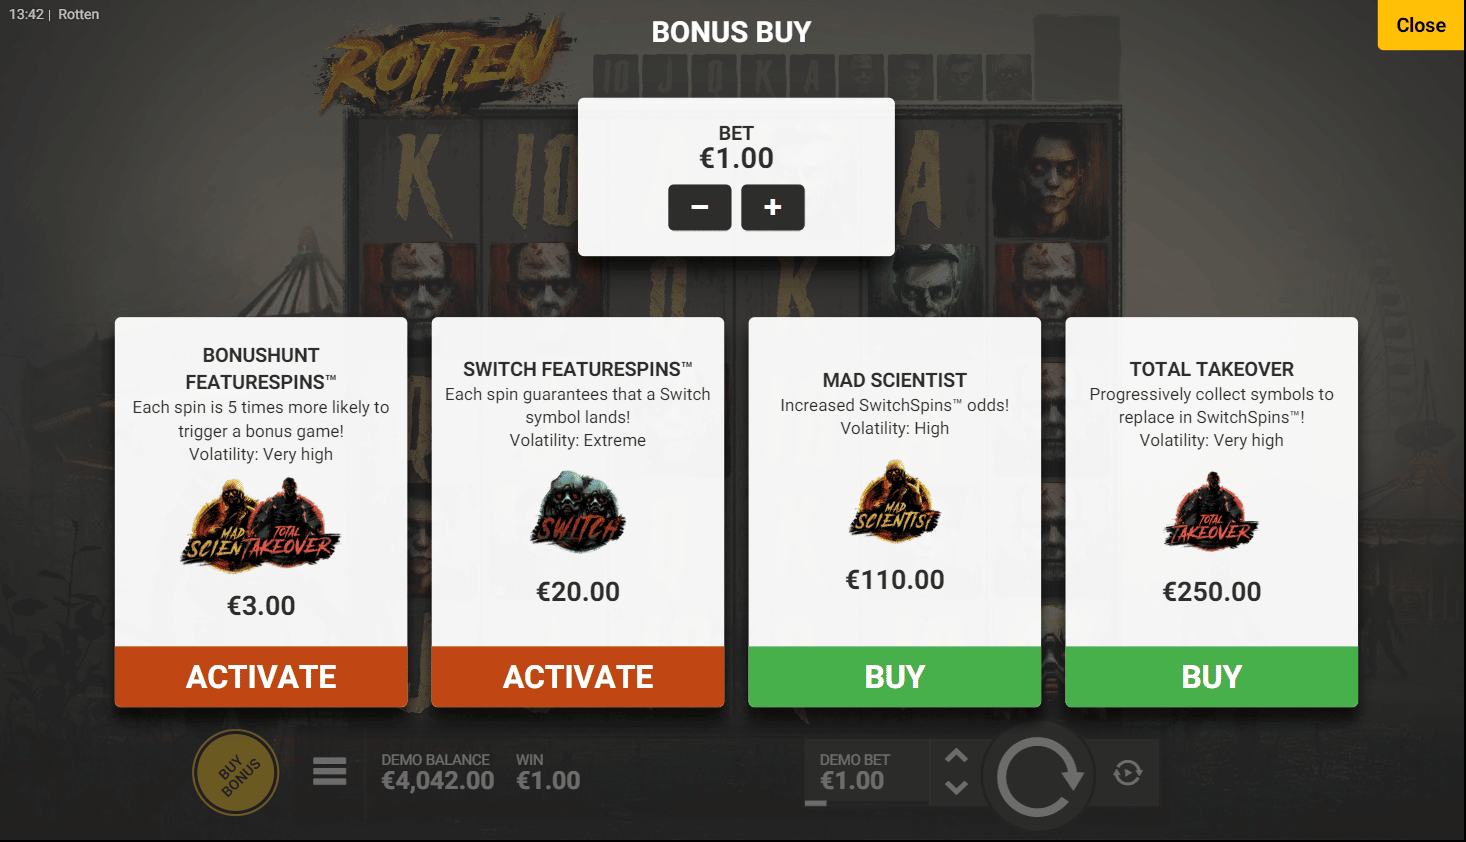 Rotten Bonus Buy Options